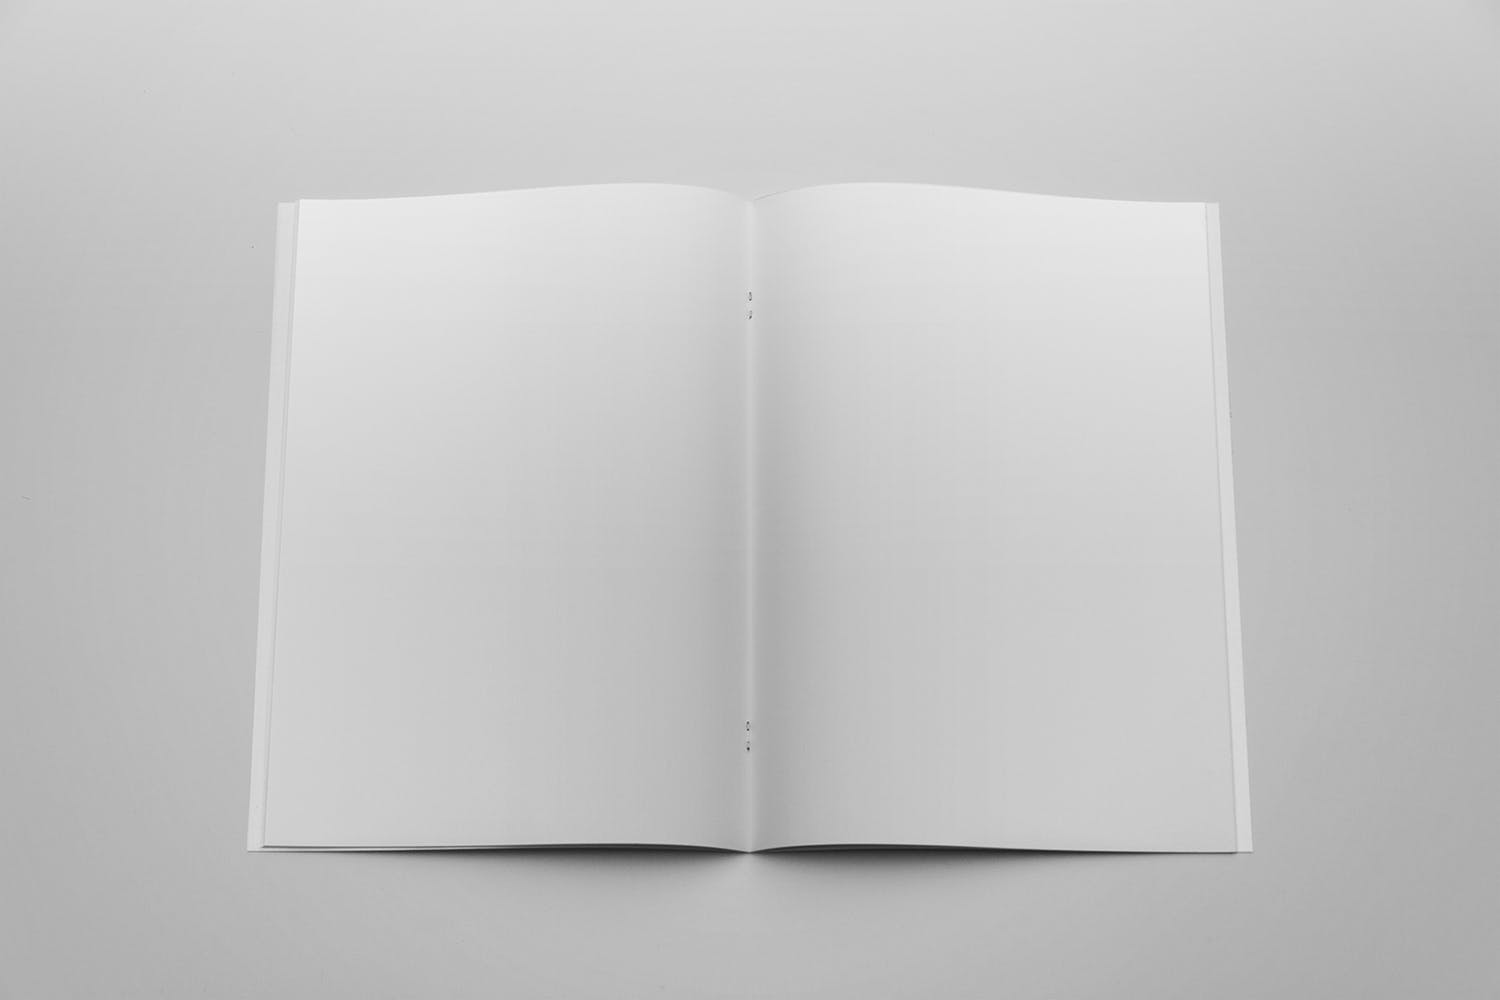 A4宣传小册子/企业画册内页设计顶视图样机蚂蚁素材精选 A4 Brochure Mockup Top View插图(1)